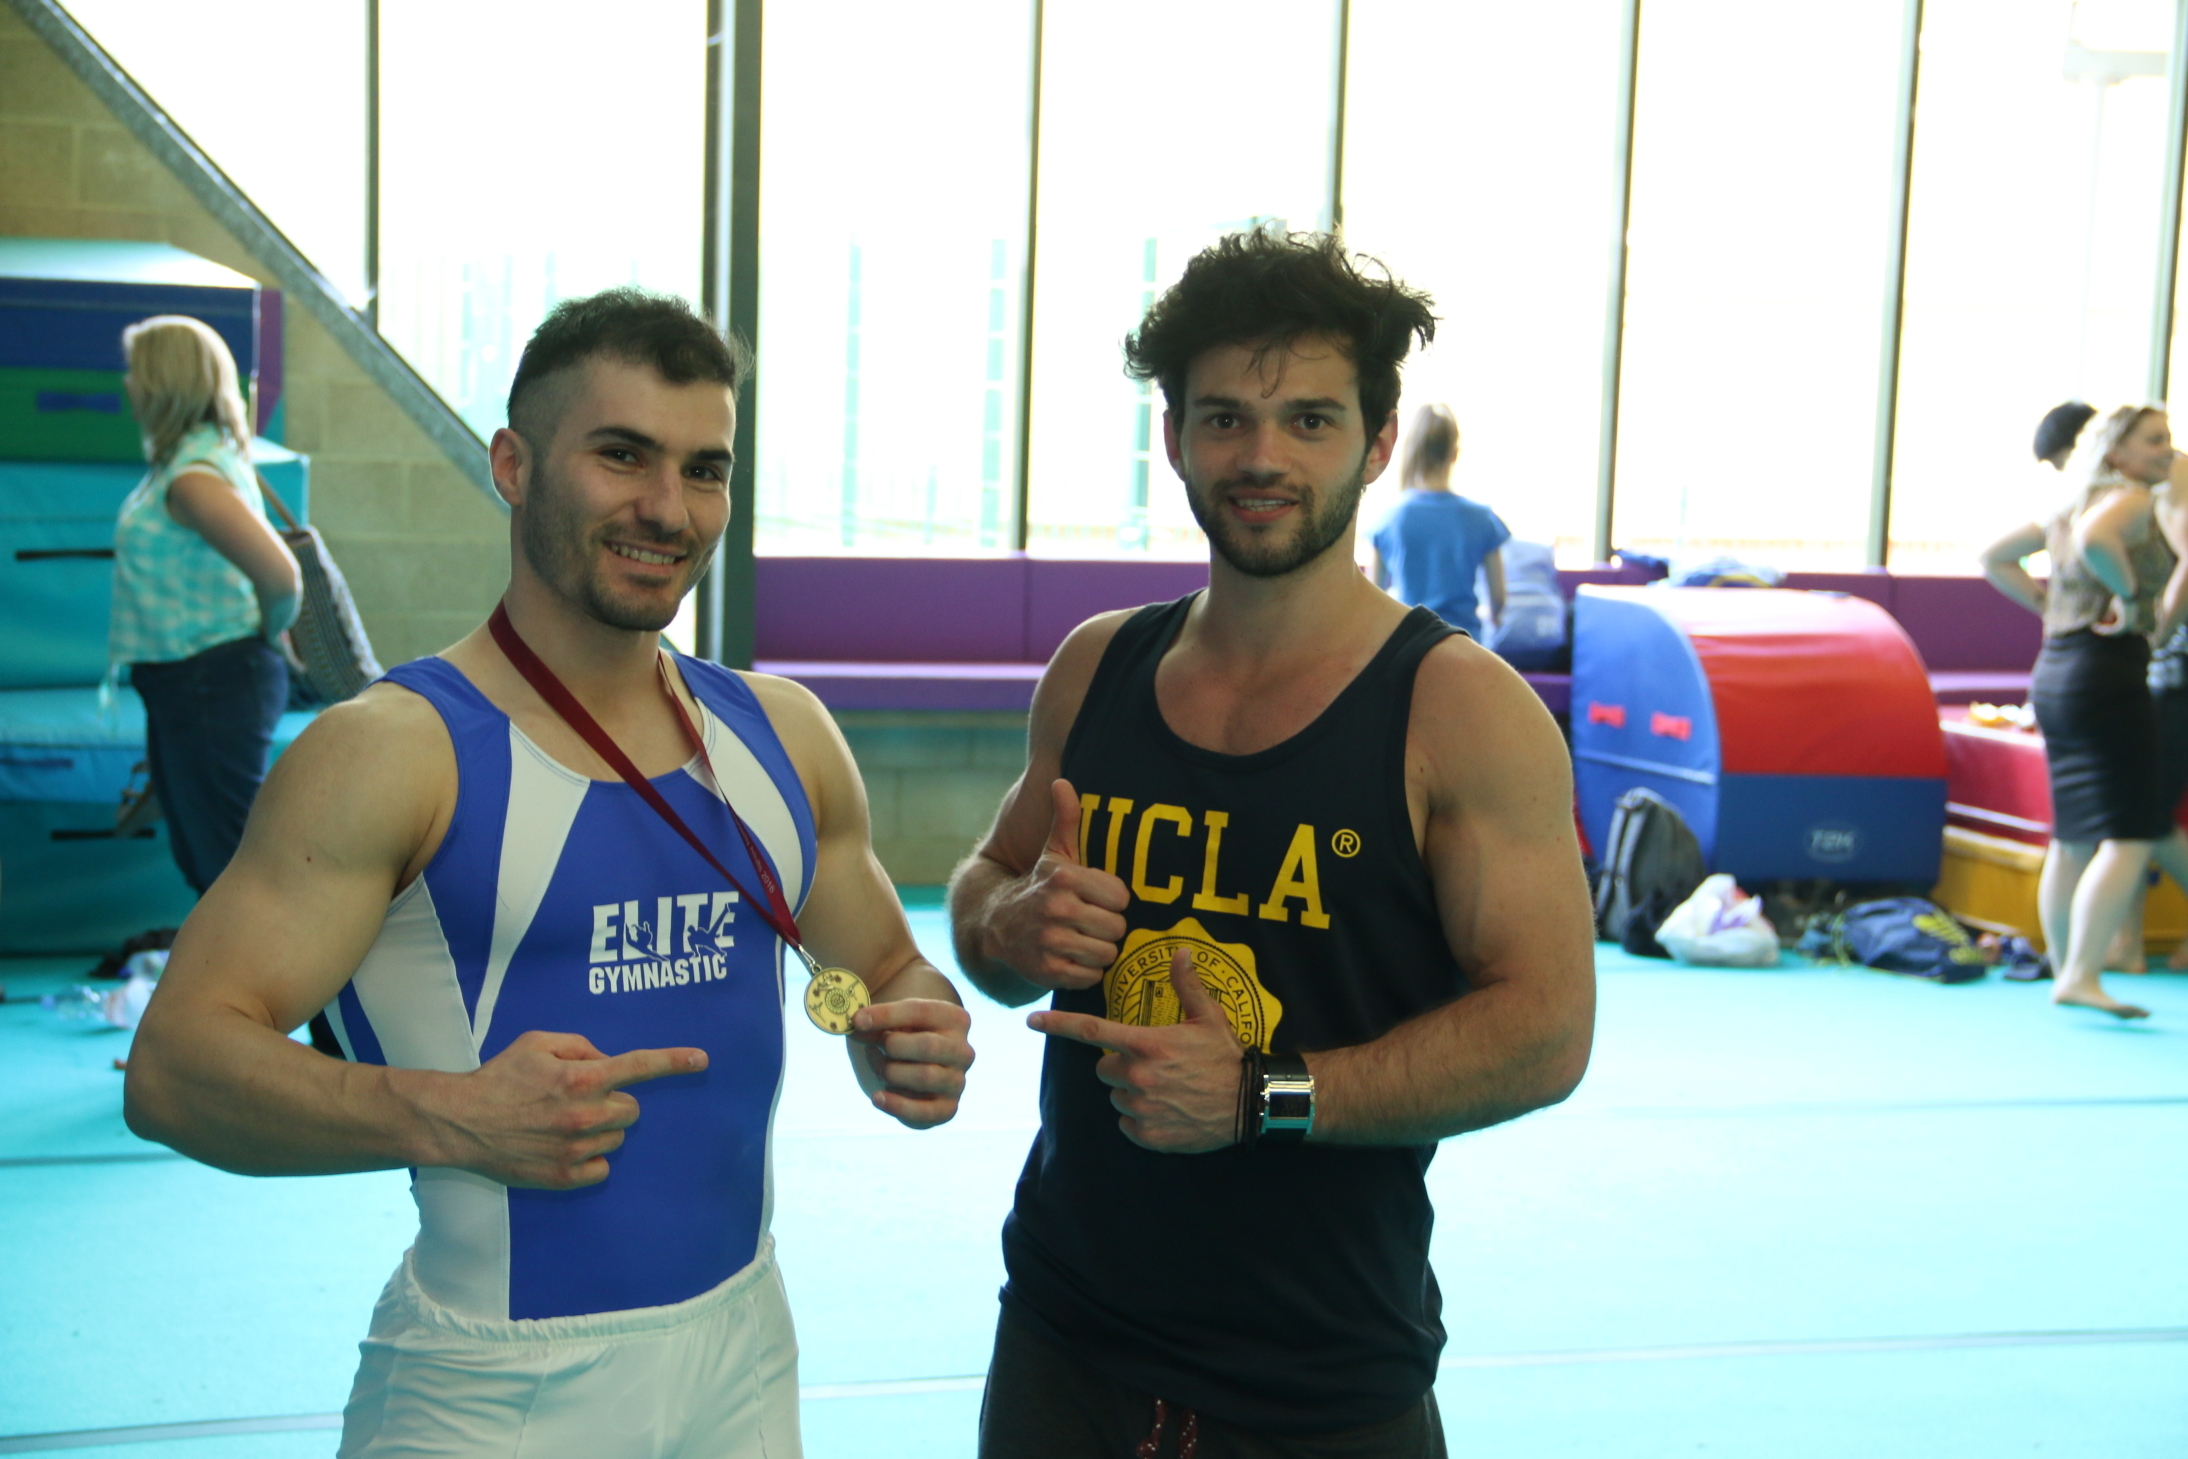 Stefan Kolimechkov and Plamen Alexandrov at the Sutton Gymnastics Academy Adults Competition 2016